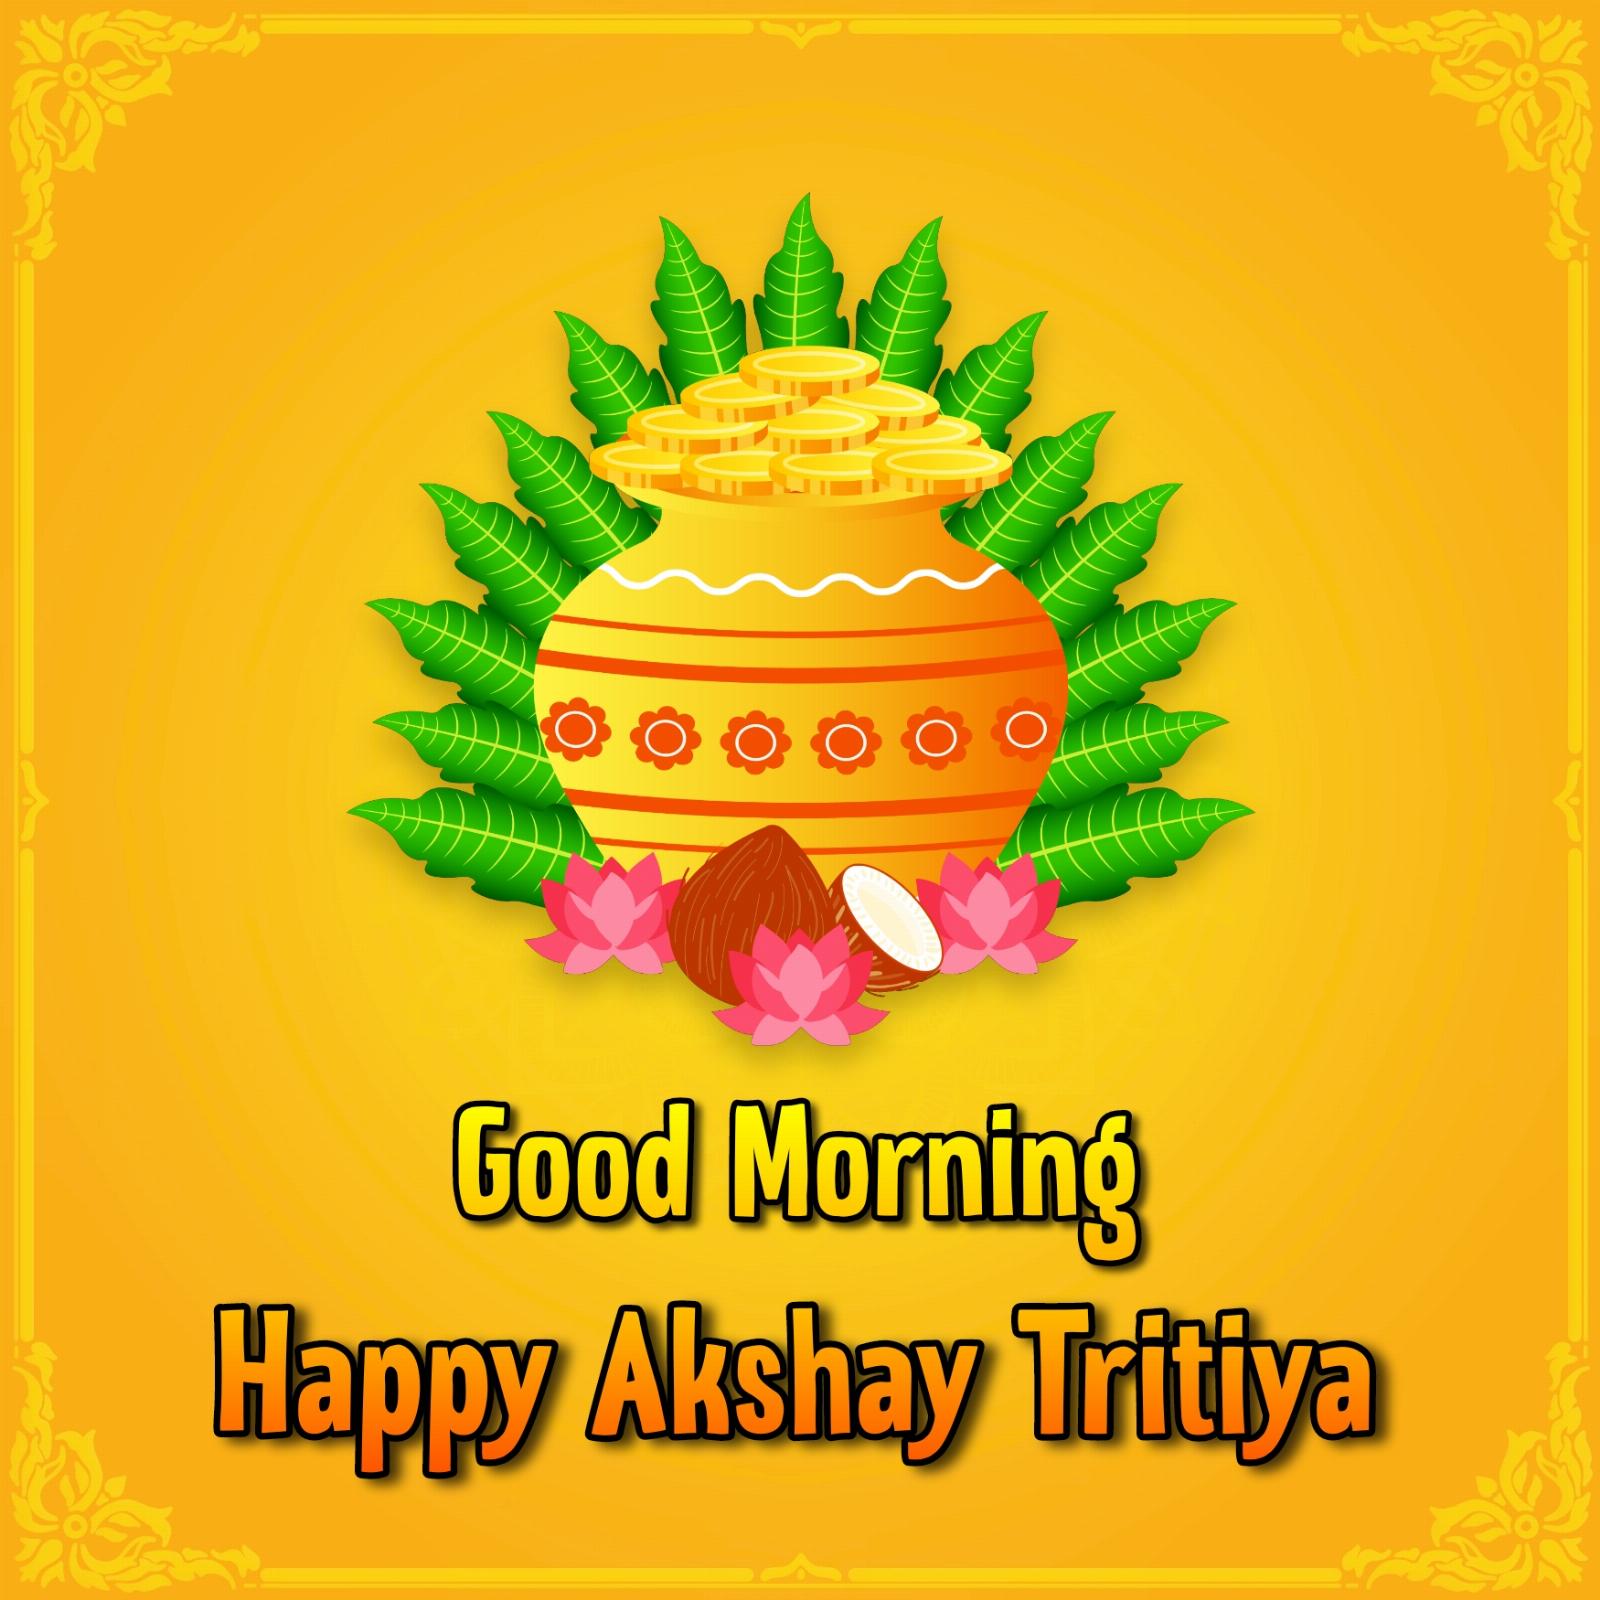 Good Morning Happy Akshay Tritiya Images